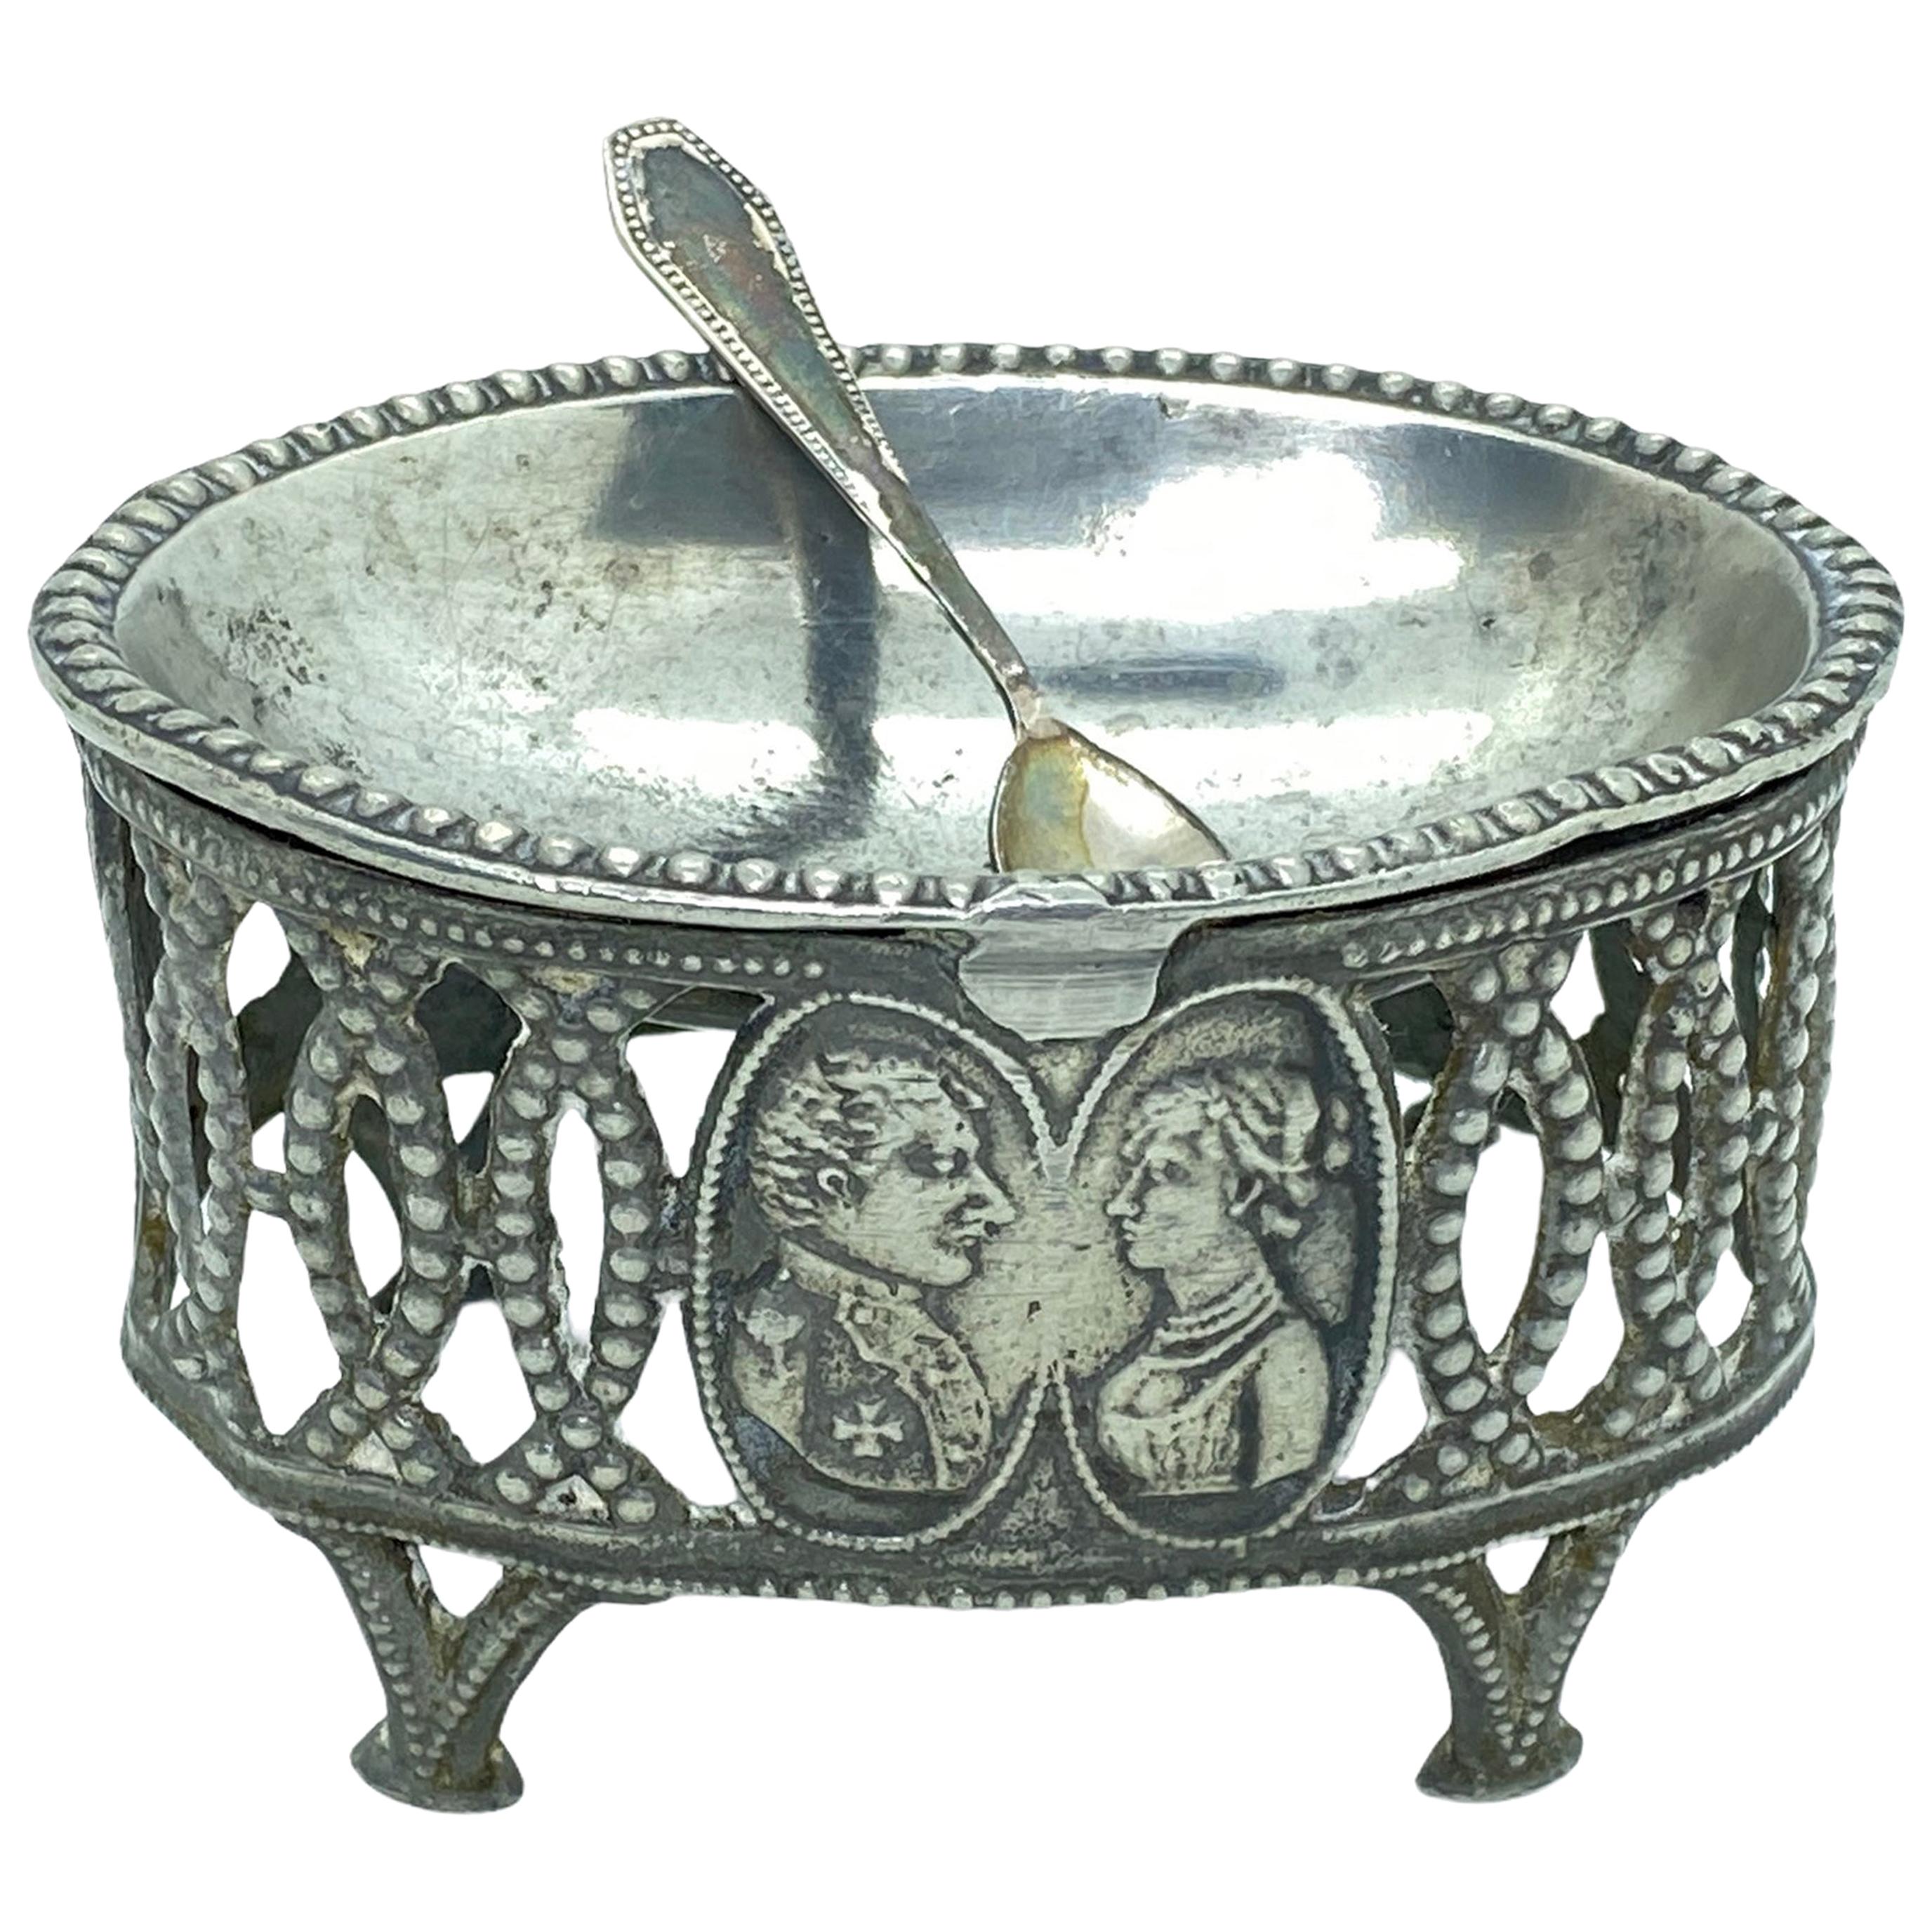 Vintage Silver Plate Open Salt Pot Catchall, 1880s, Germany or Austria For Sale